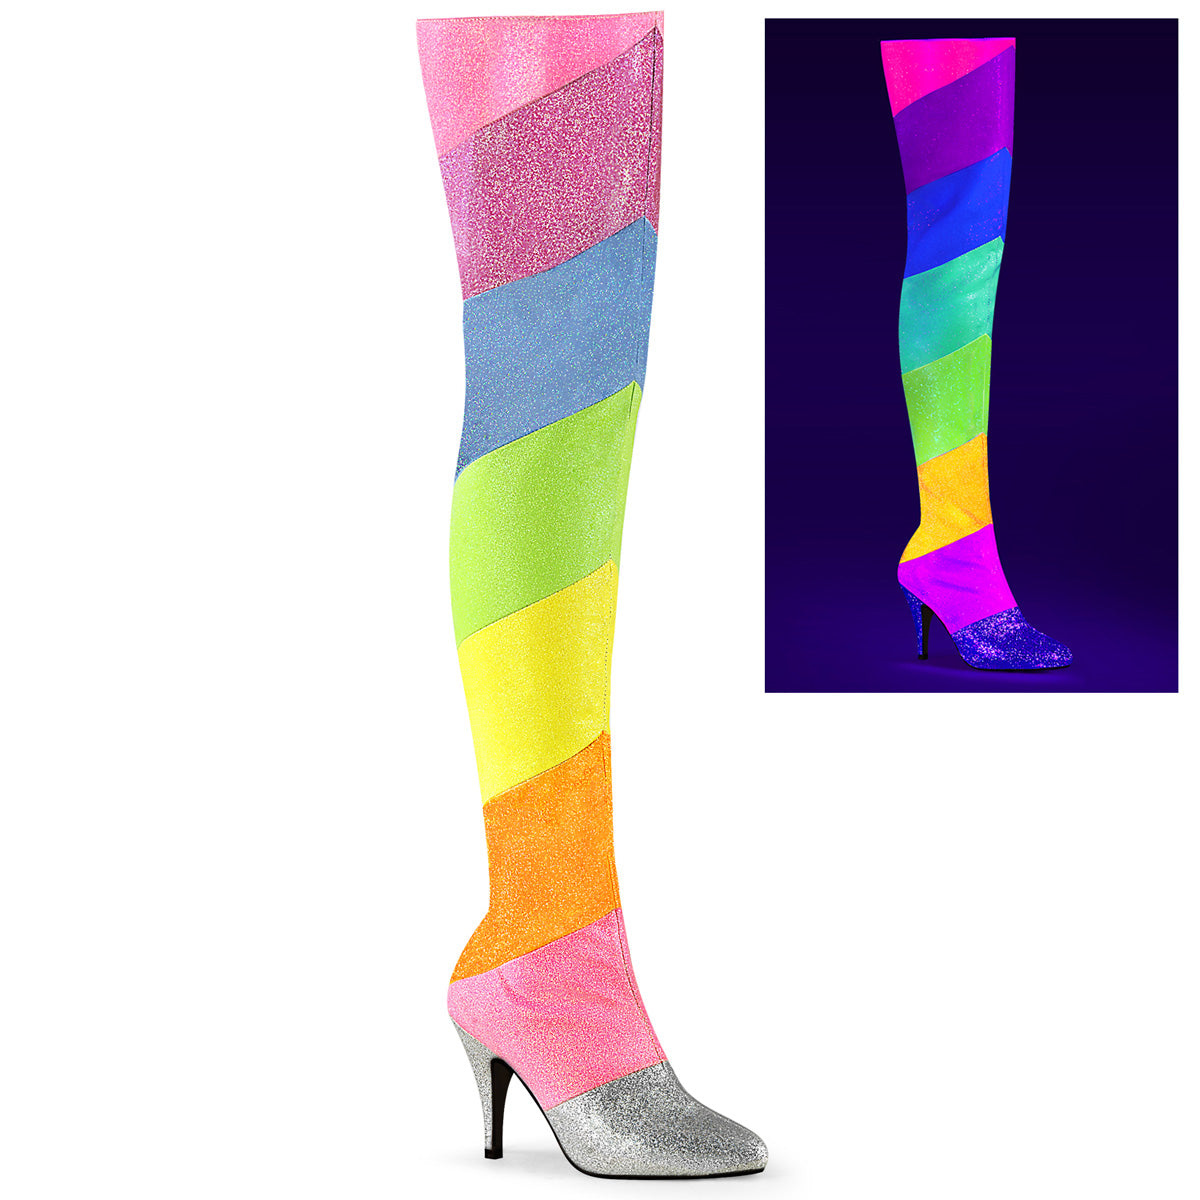 Pleaser Pink Label Womens Pumps DREAM-3012RBG Multi-Rainbow Multi Glitter